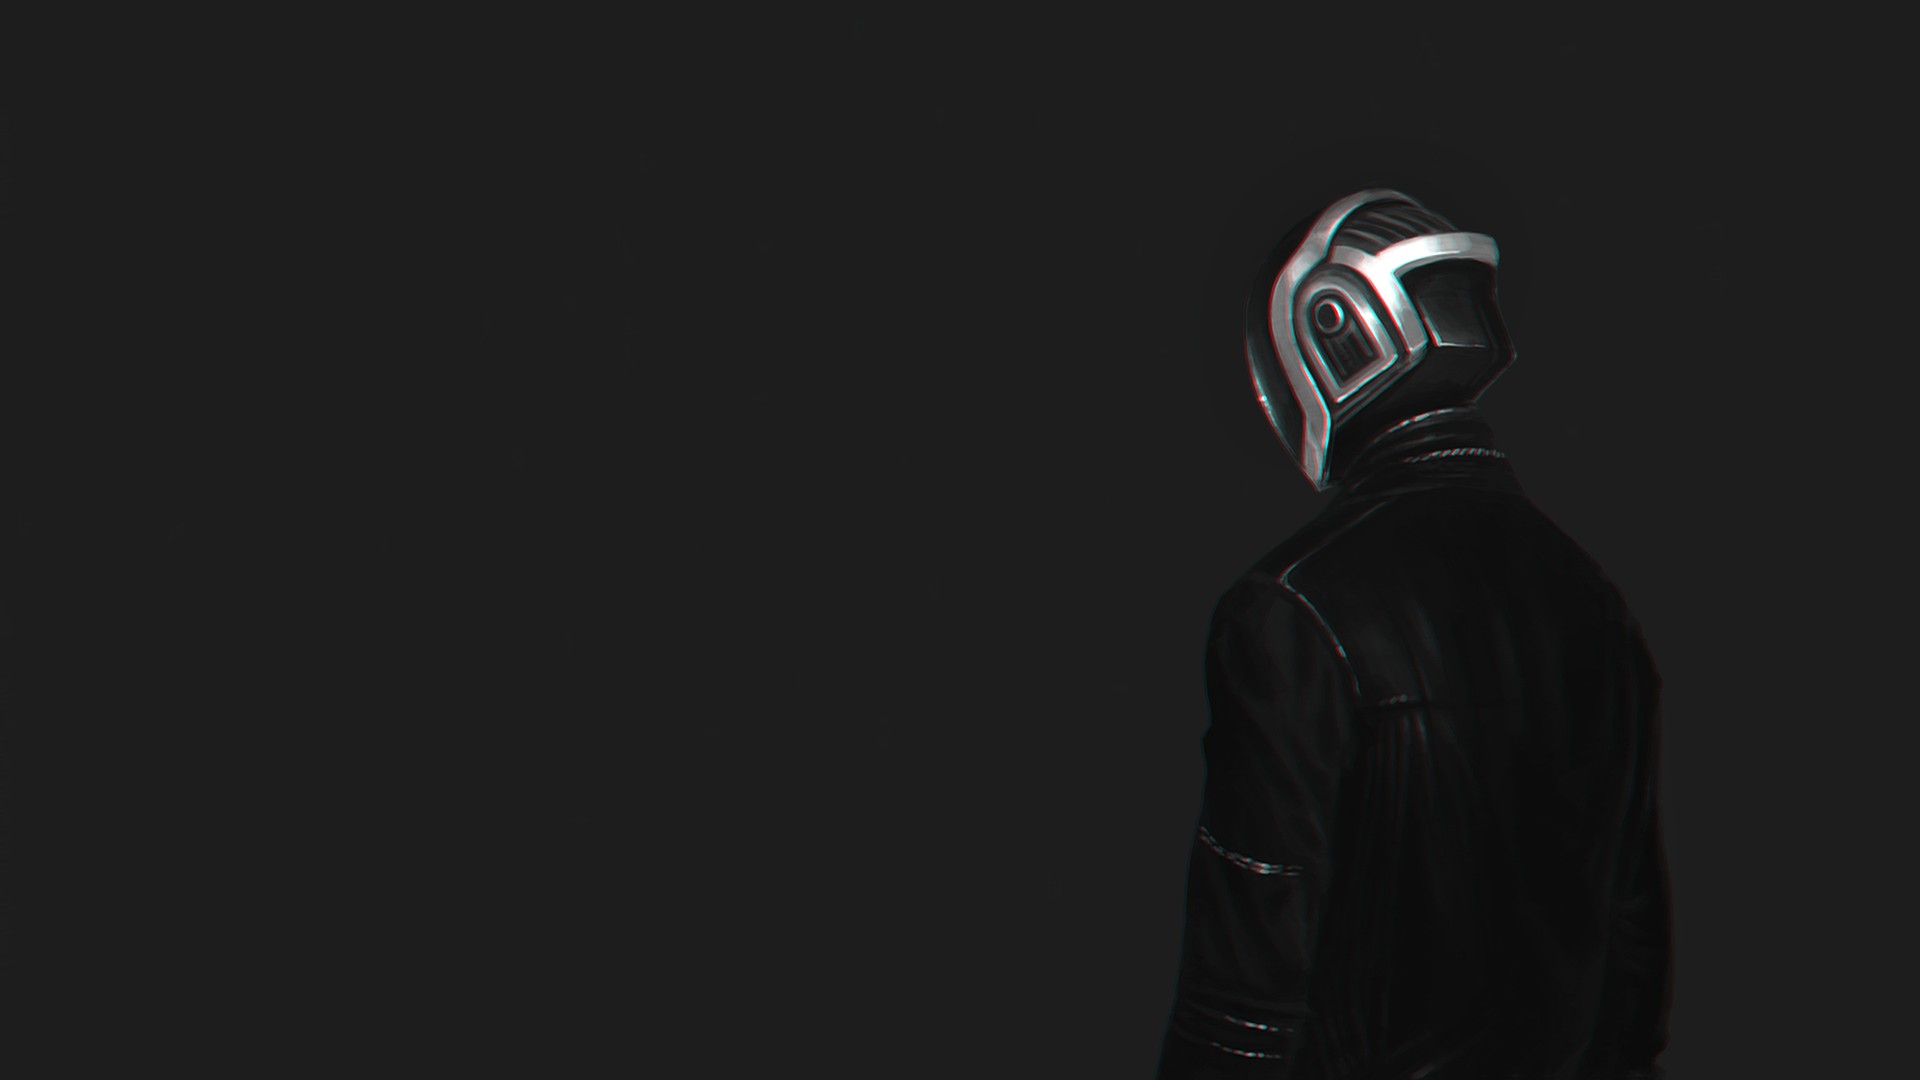 Guy Manuel de Homem Christo, Daft Punk, Chromatic aberration, Simple background, Jacket Wallpaper